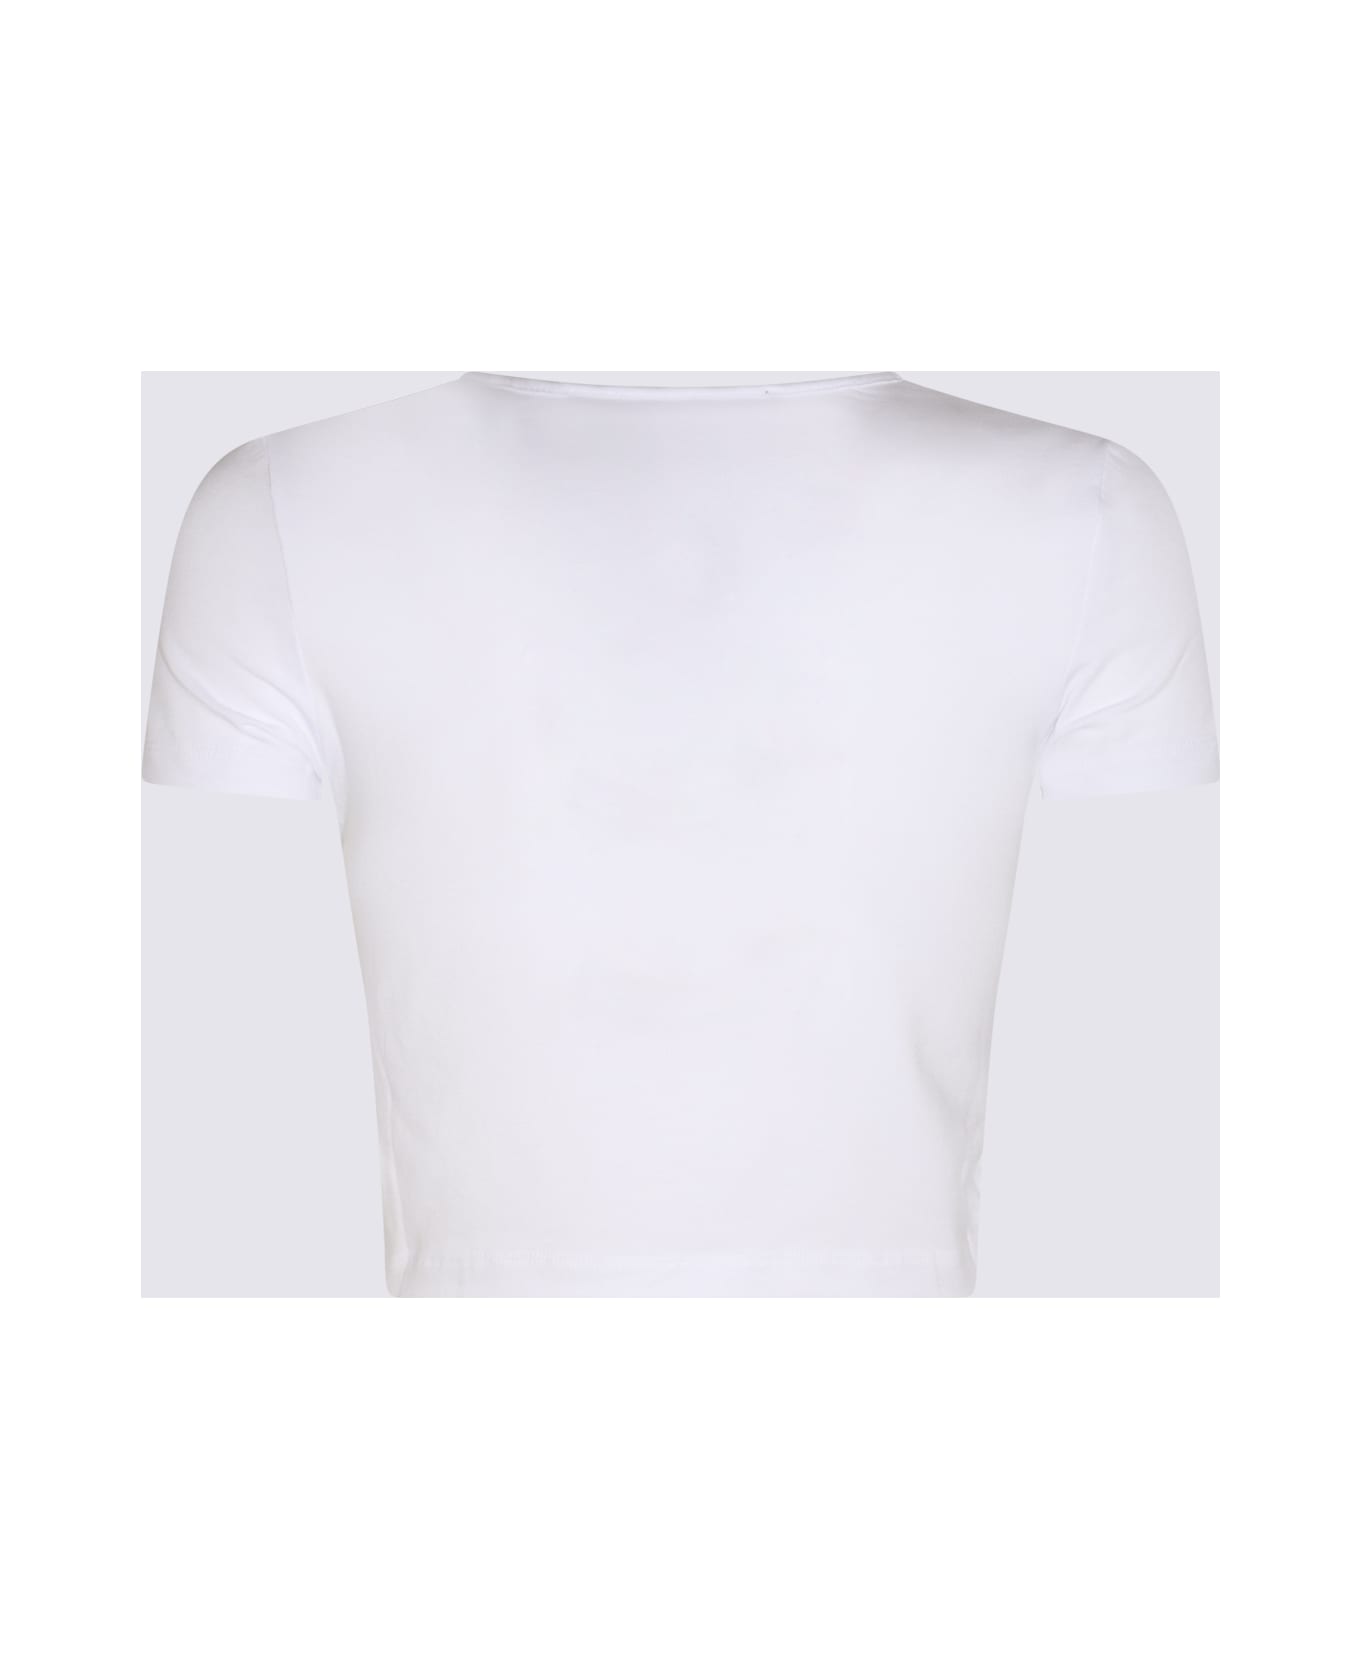 Rotate by Birger Christensen Bright White Cotton May T-shirt - White